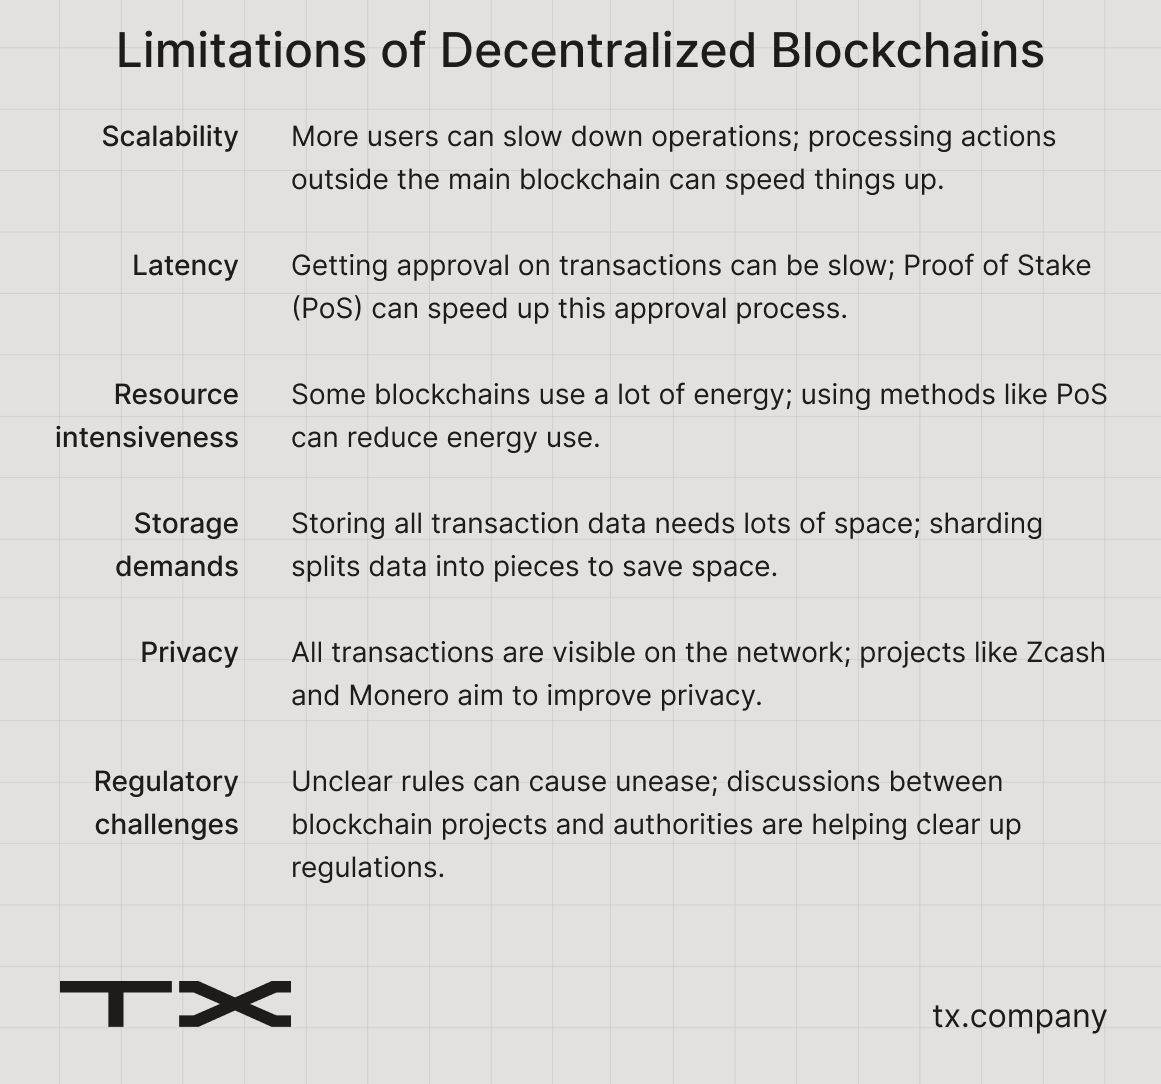 Limitations of decentralized blockchains.